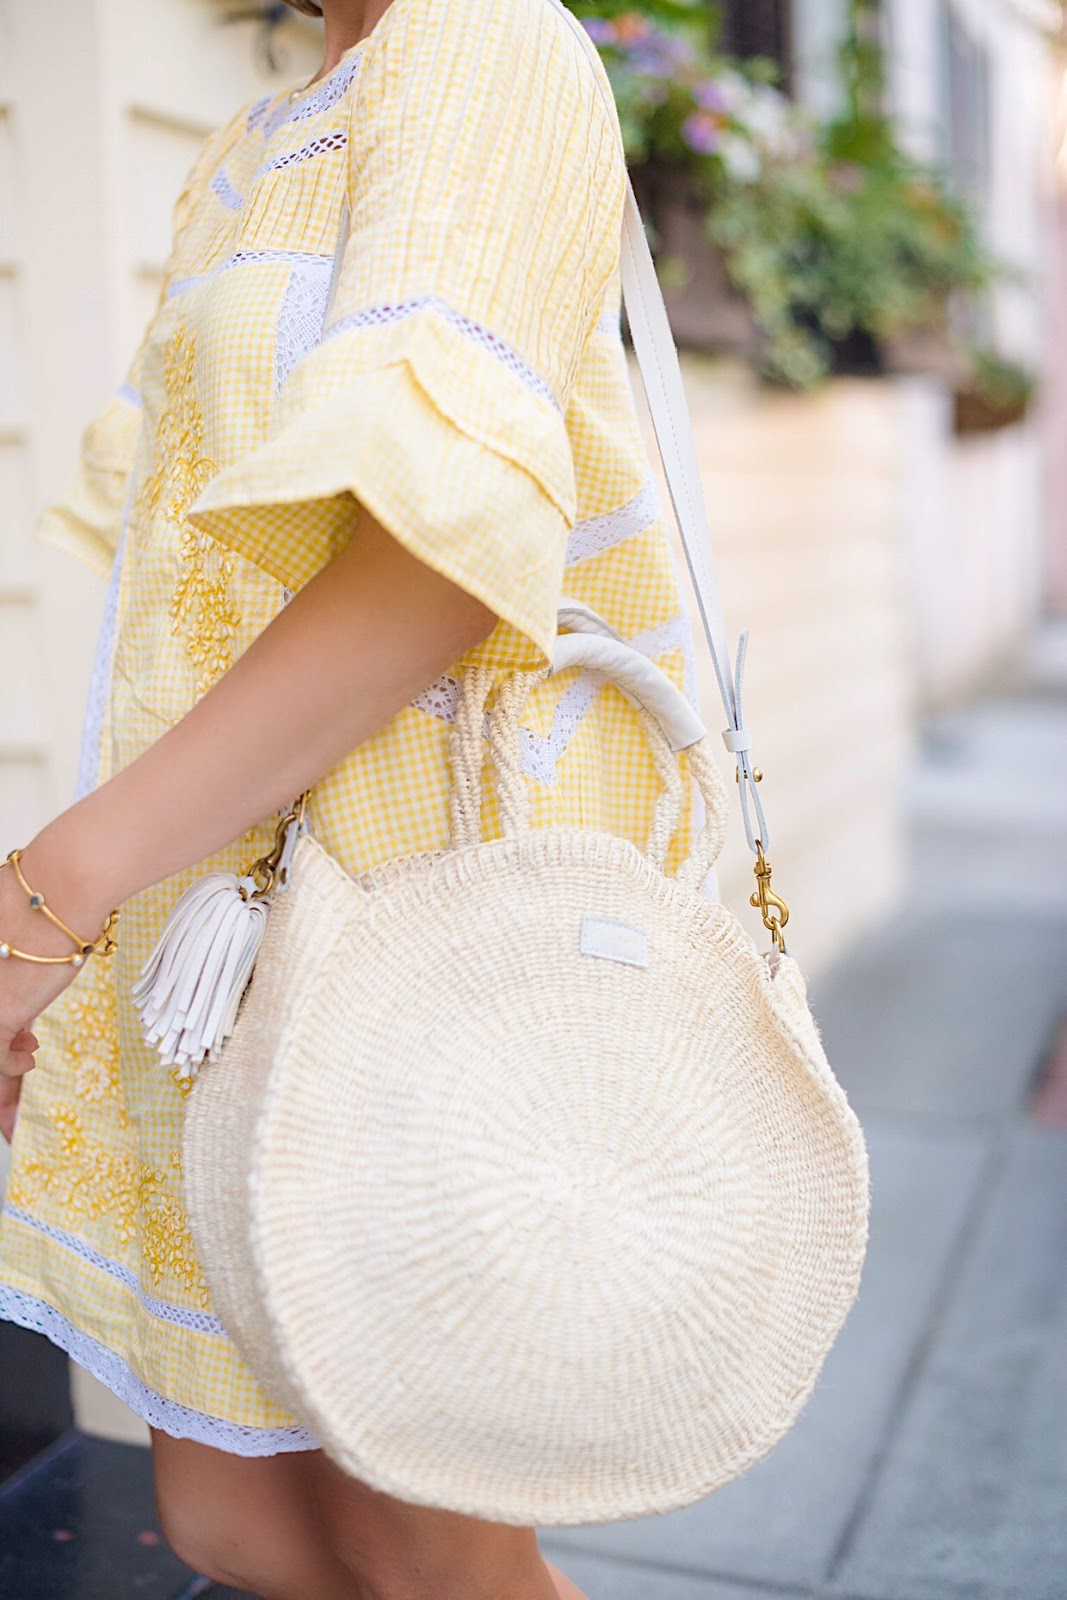 Free People Sunny Day Dress + Clare V Alice Bag in Charleston - Something Delightful Blog